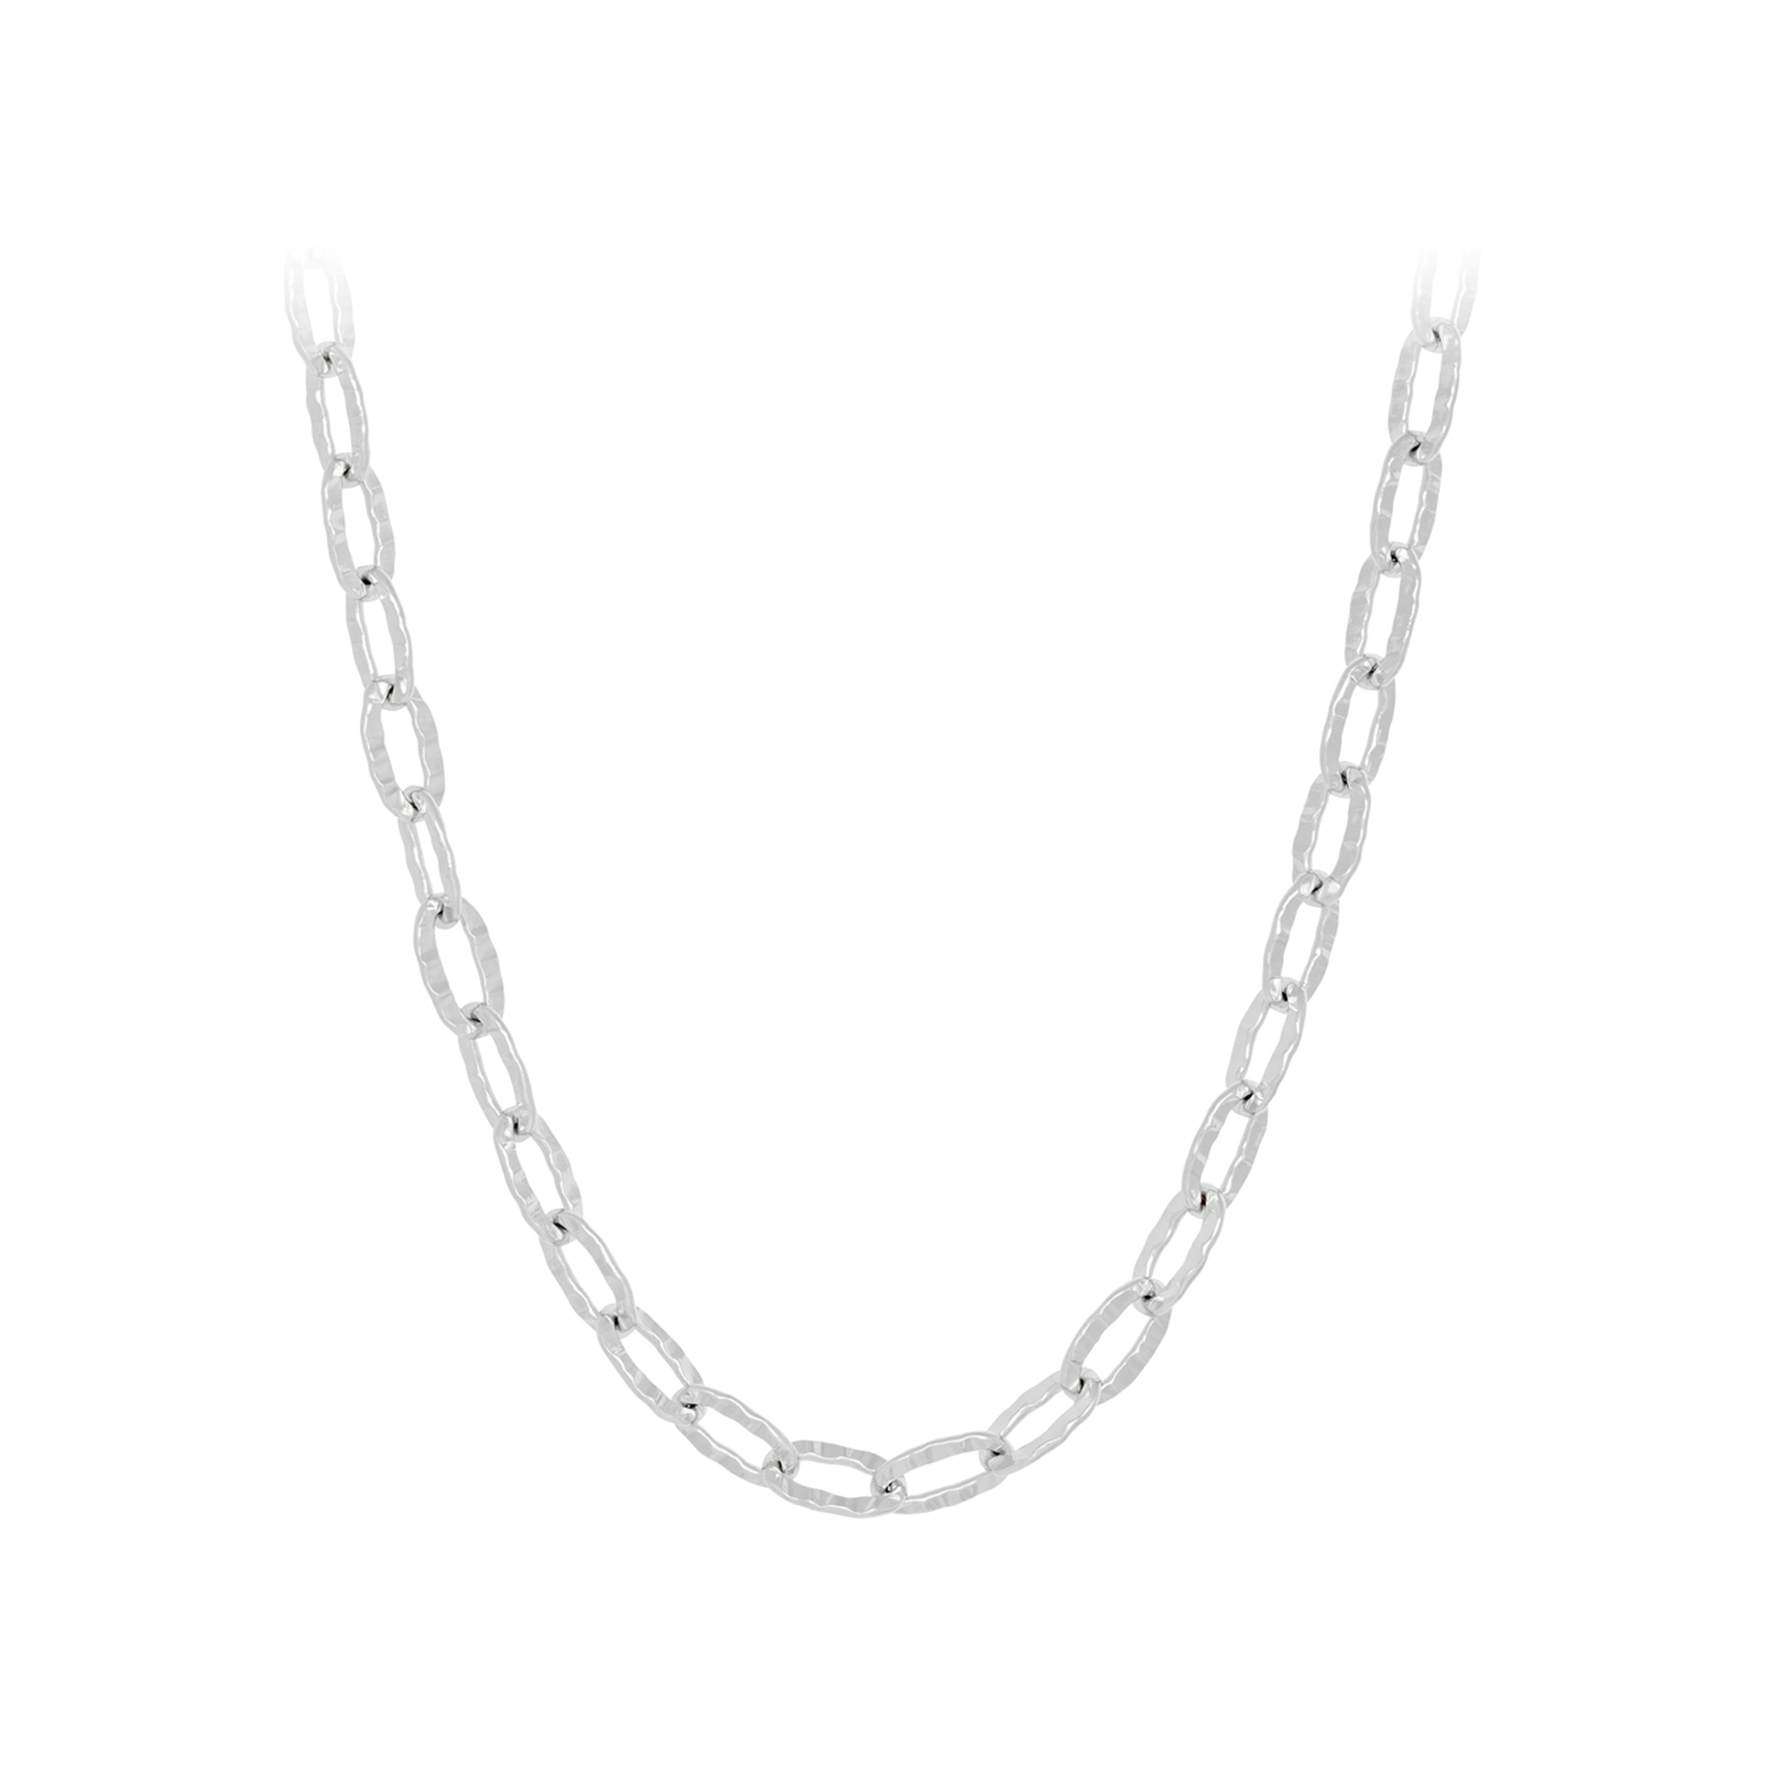 Ines Necklace från Pernille Corydon i Silver Sterling 925